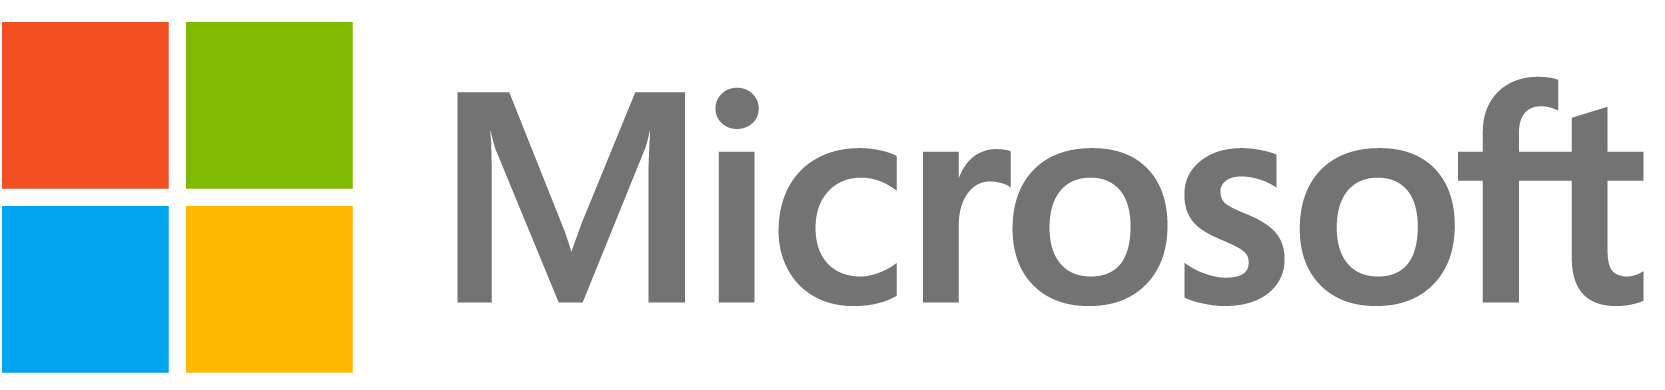 Microsoft text logo